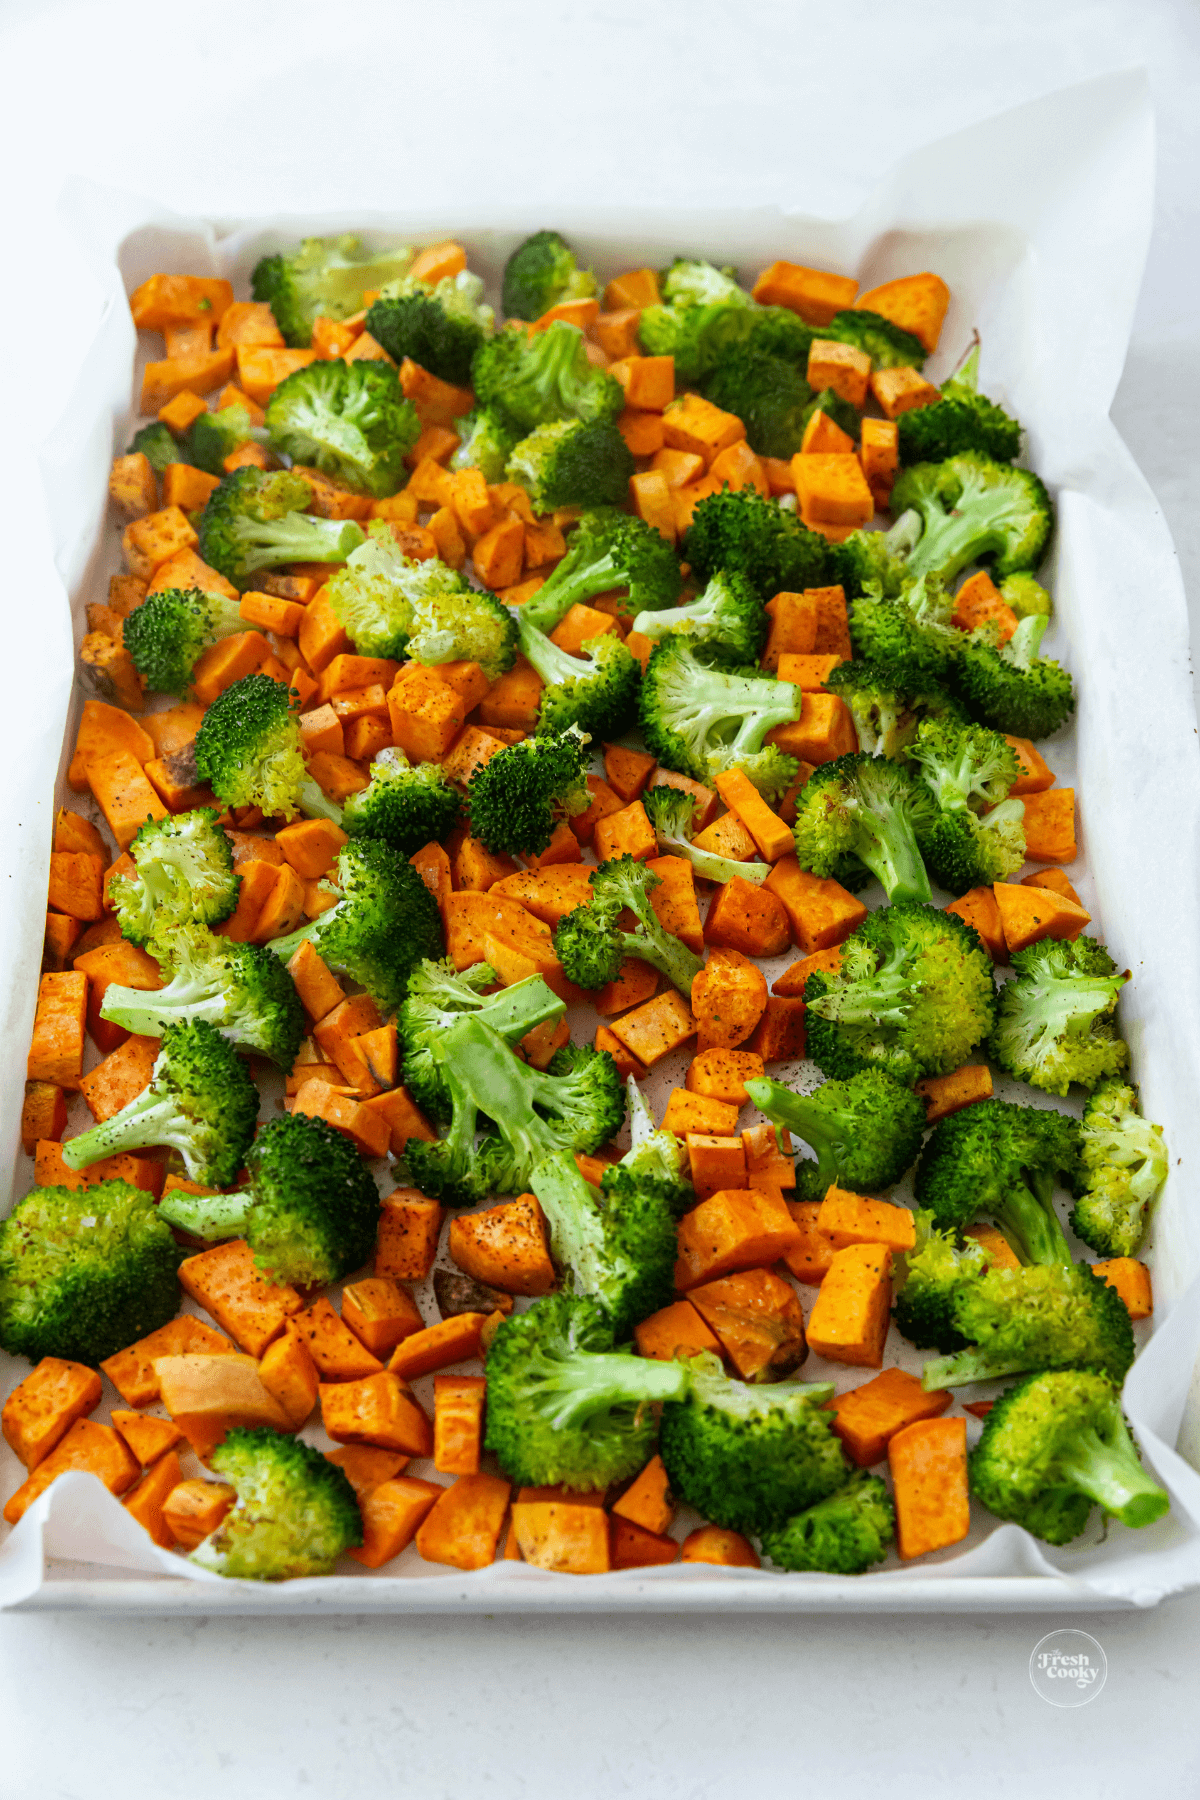 Sweet potatoes and broccoli on sheet pan.